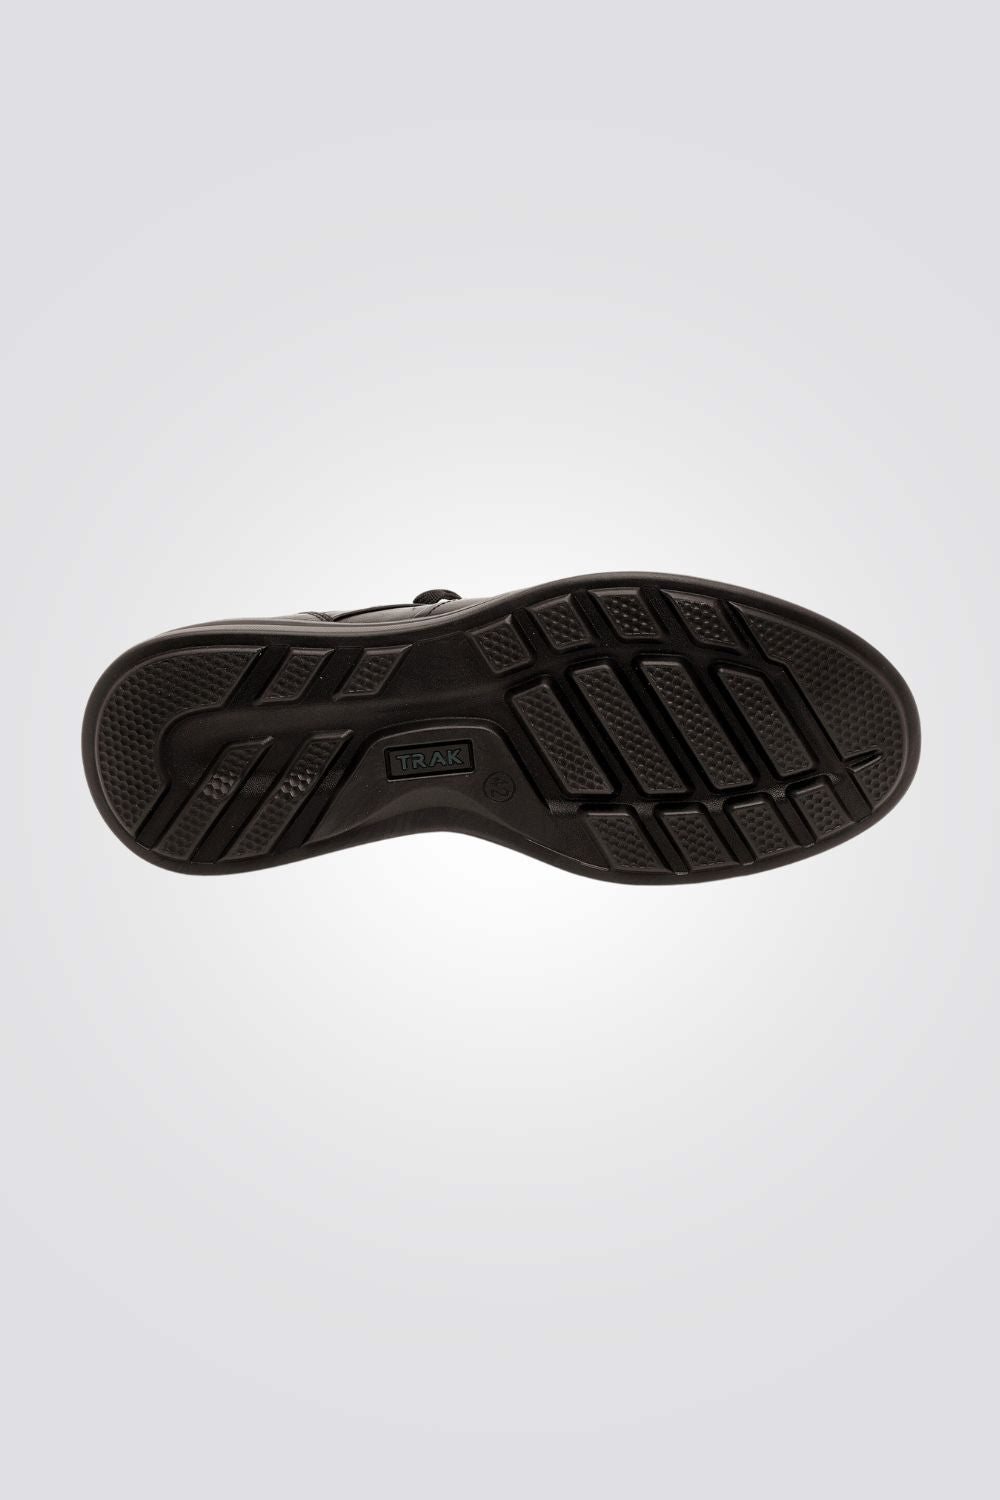 TRAK - נעל עור אלגנט צבע שחור דגם נירן - MASHBIR//365